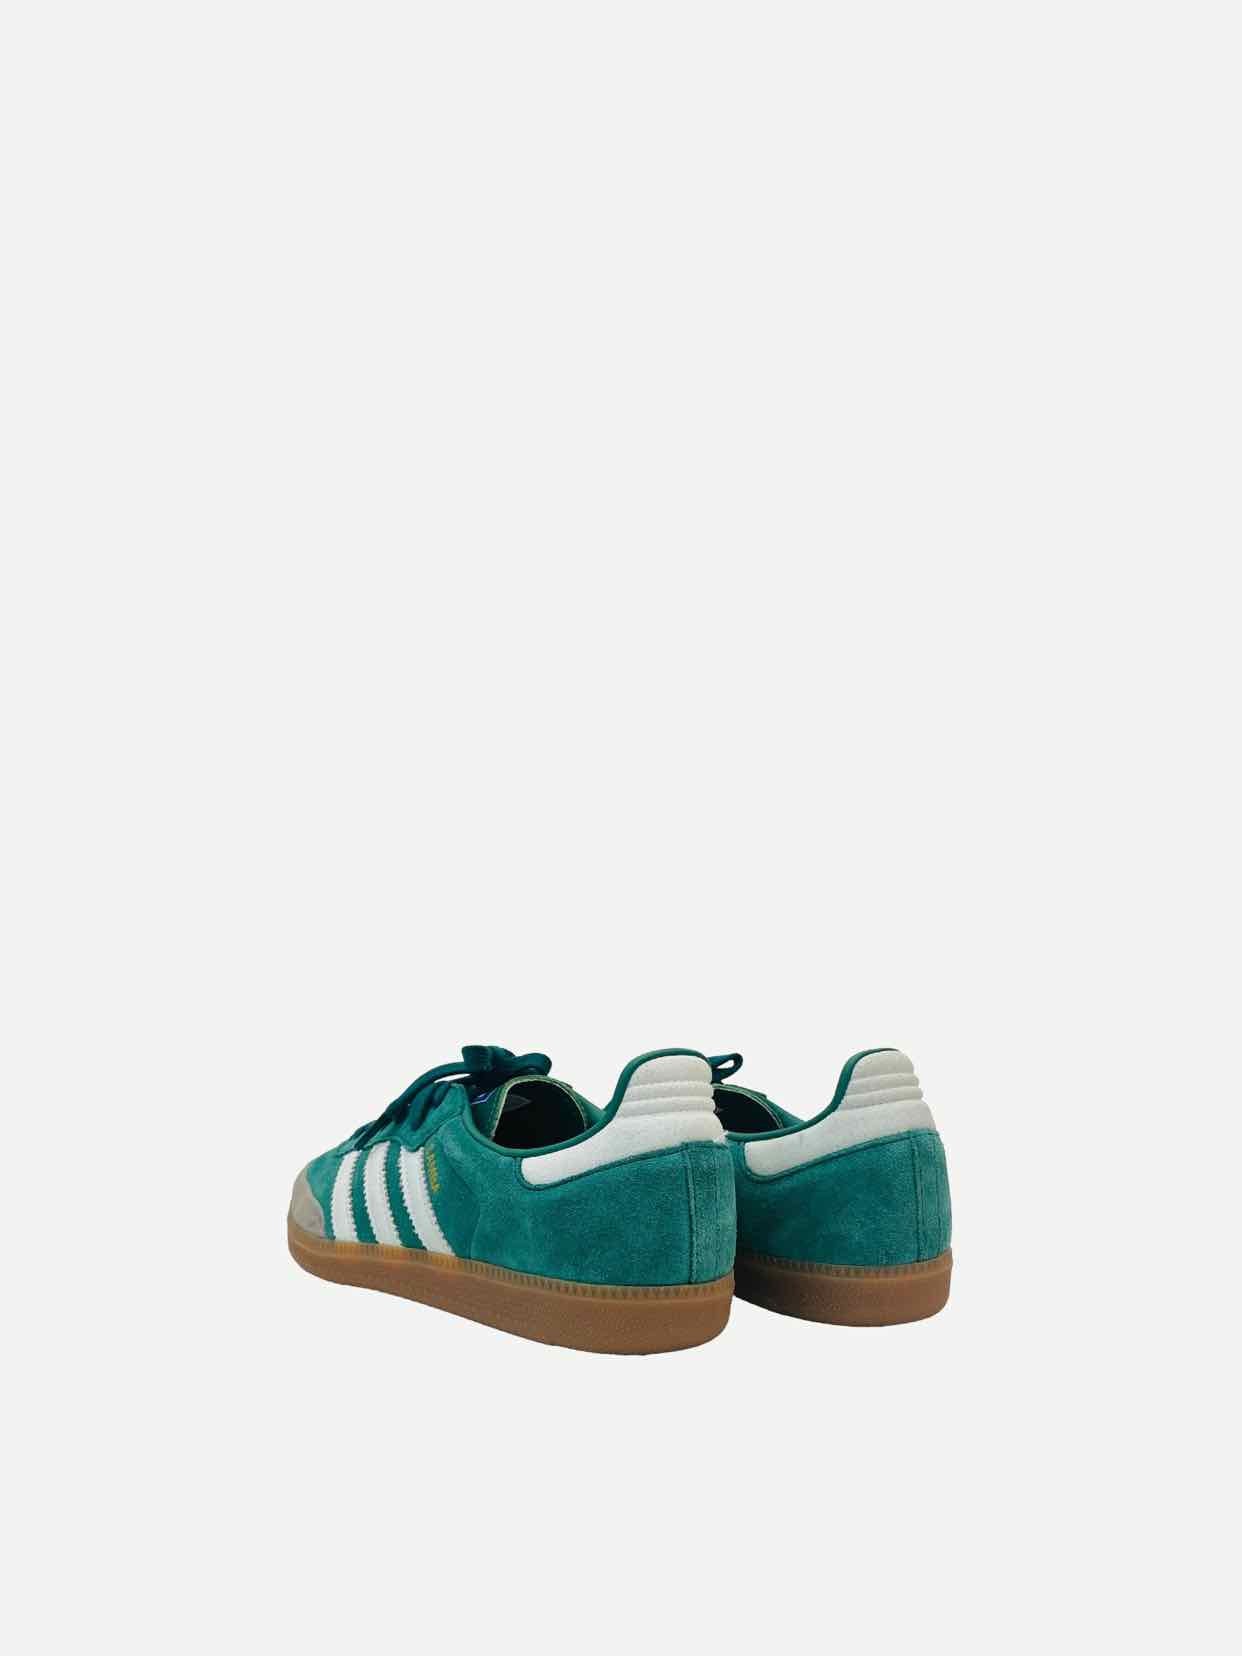 ADIDAS Samba OG Green Sneakers